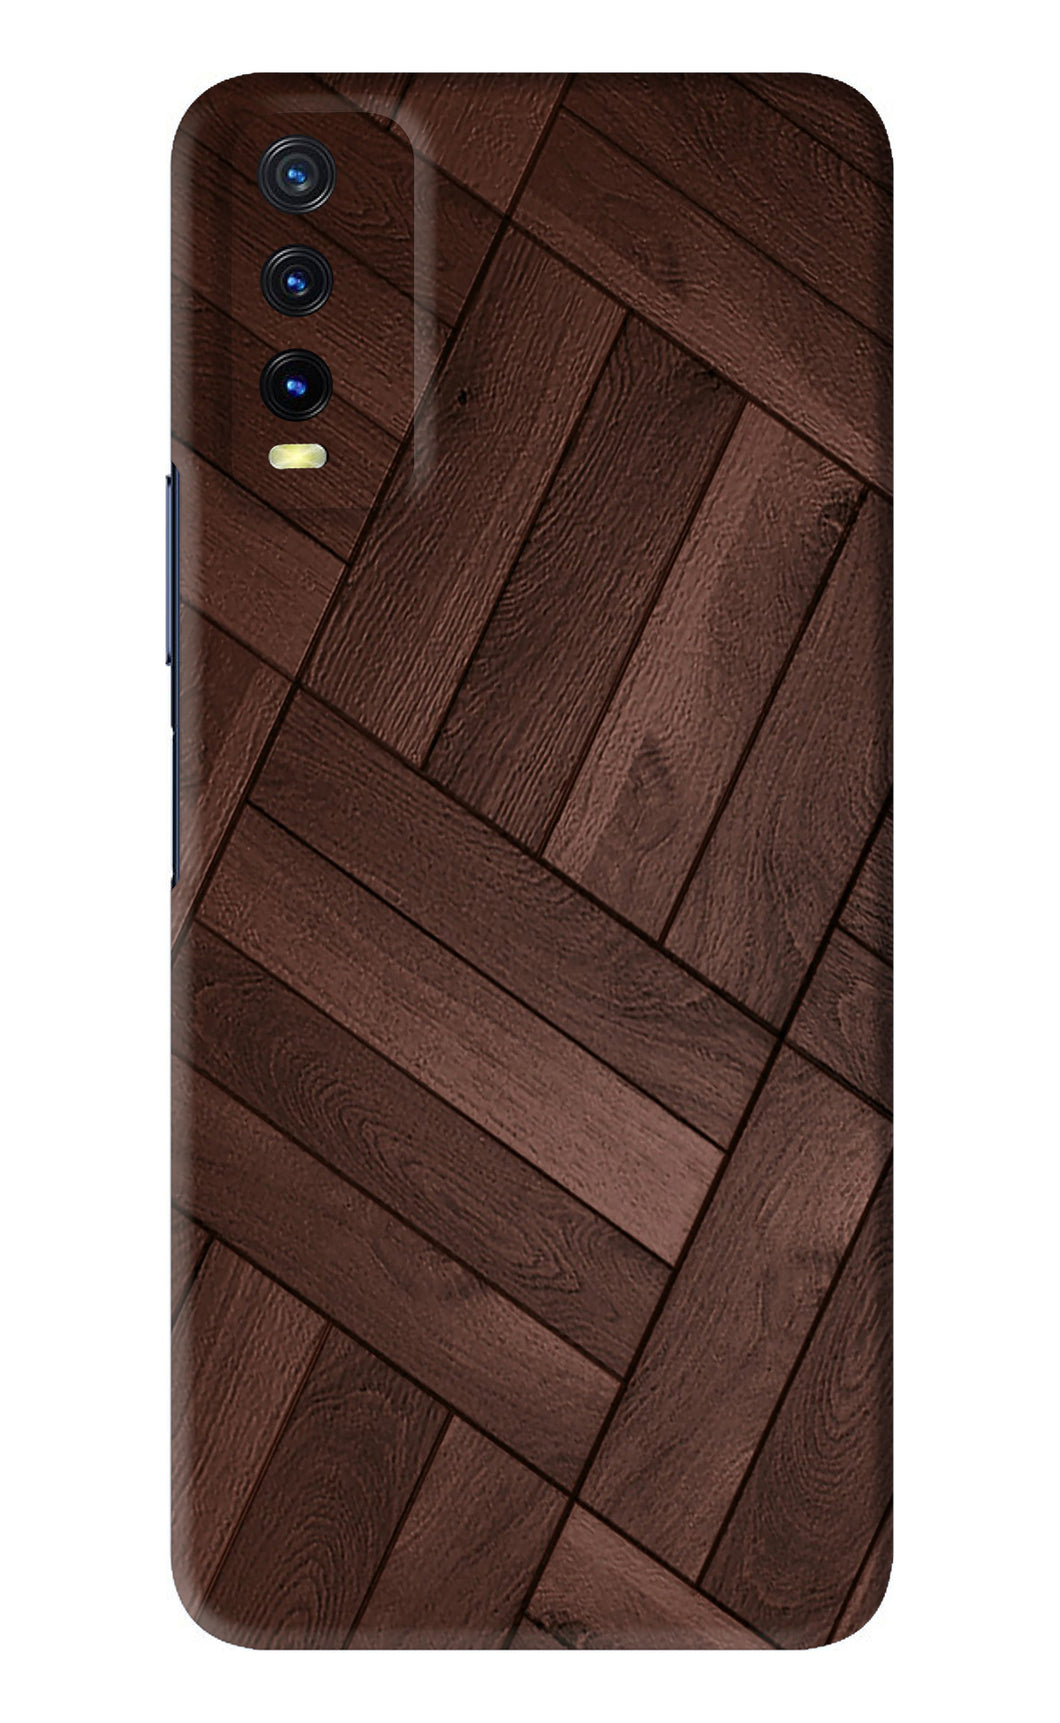 Wooden Texture Design Vivo Y20 Back Skin Wrap